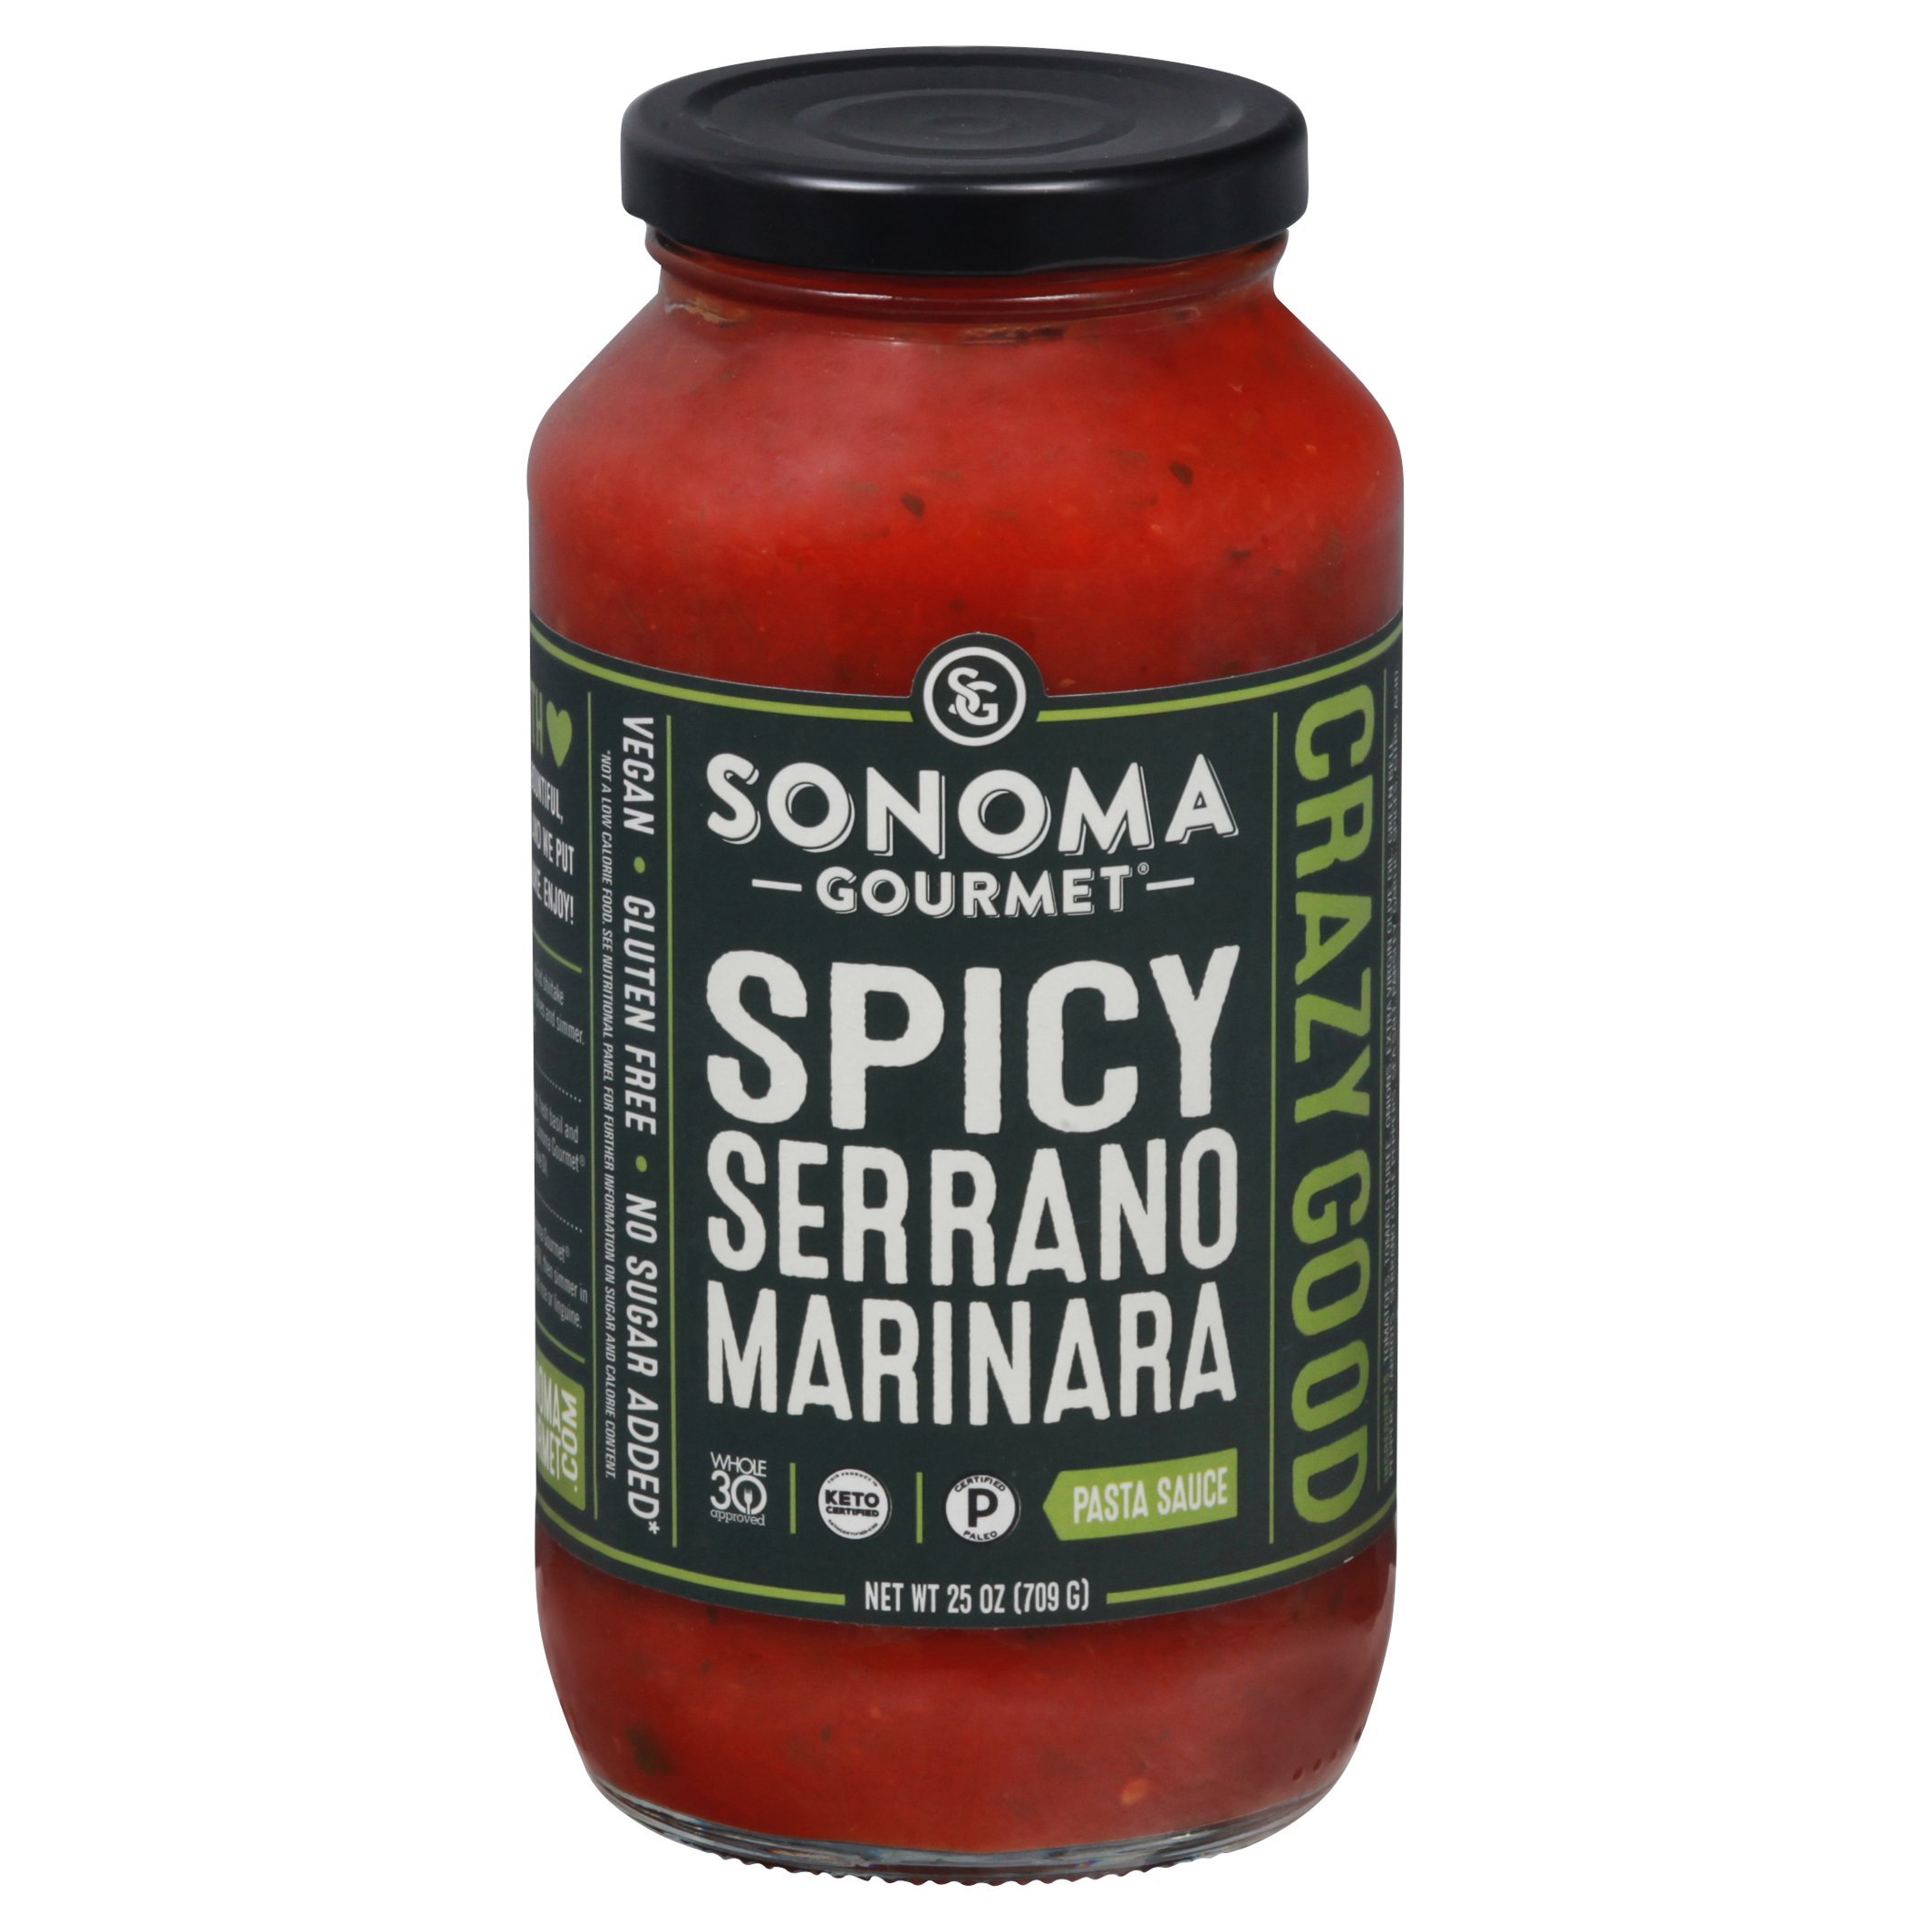 Sonoma Gourmet Spicy Serrano Marinara Pasta Sauce Shop Pasta Sauces At H E B 